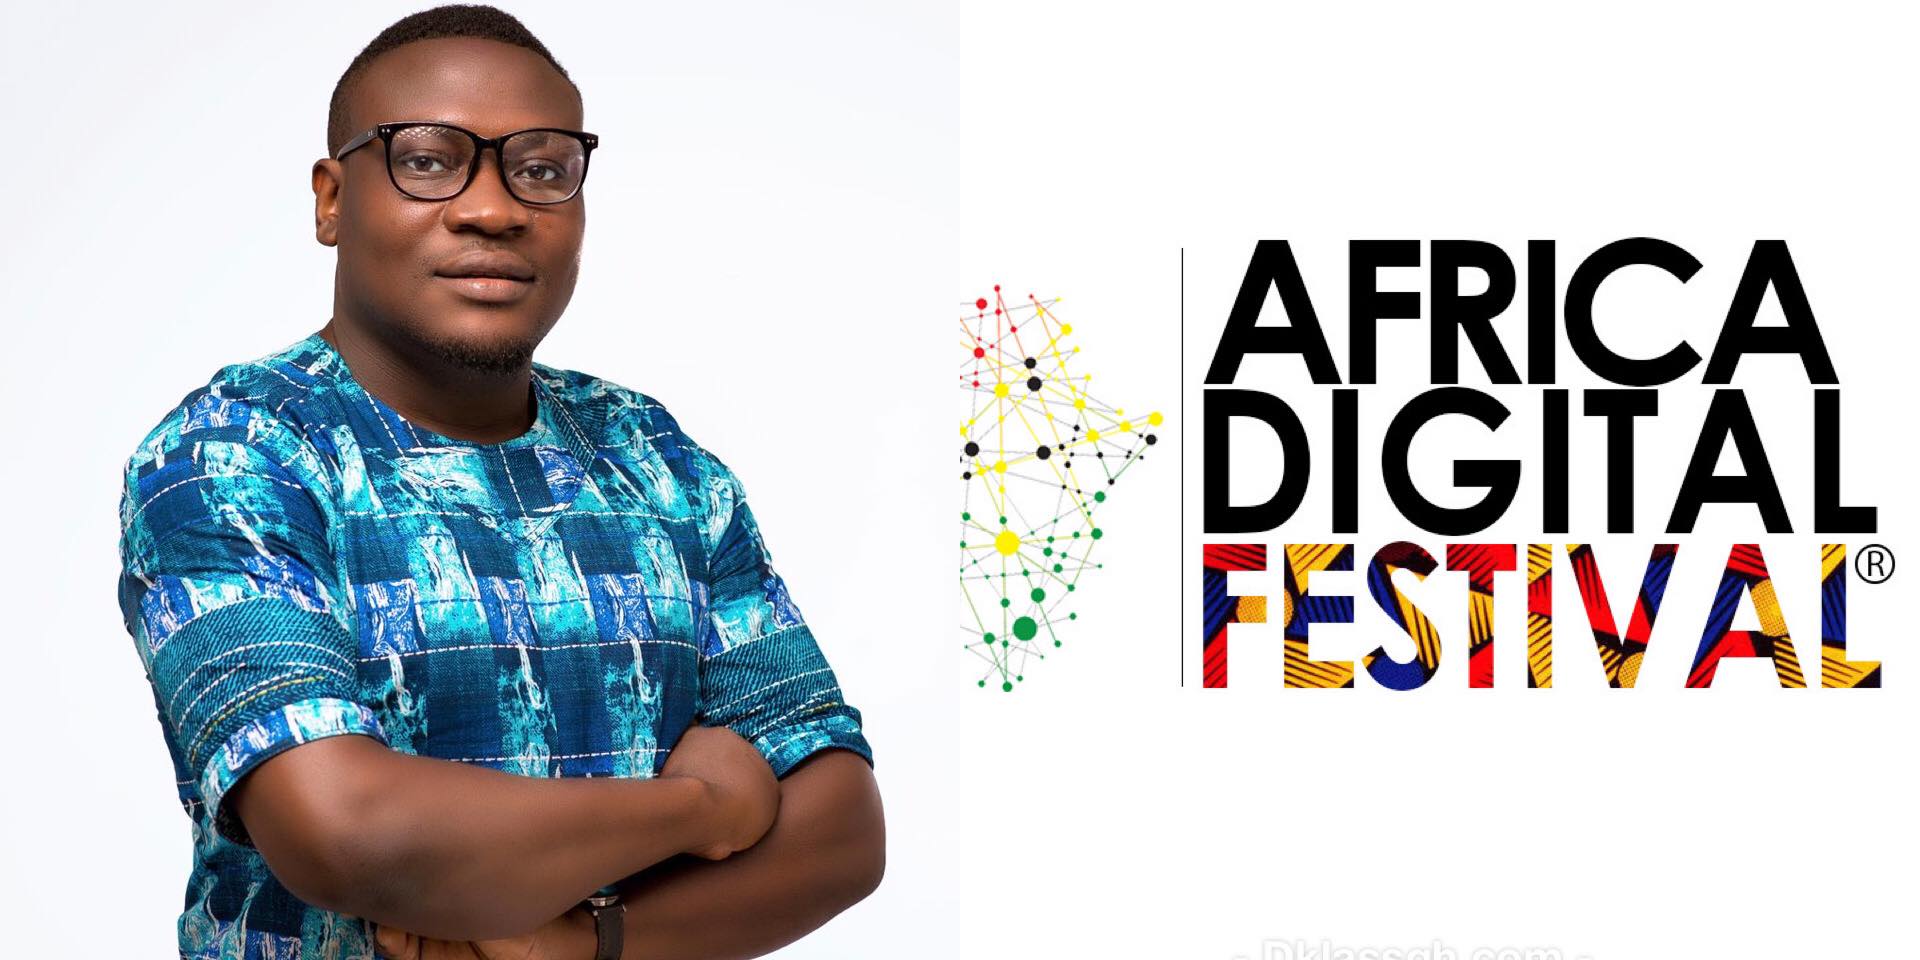 Africa Digital Festival Appoint Jonilar as Head of Relations.